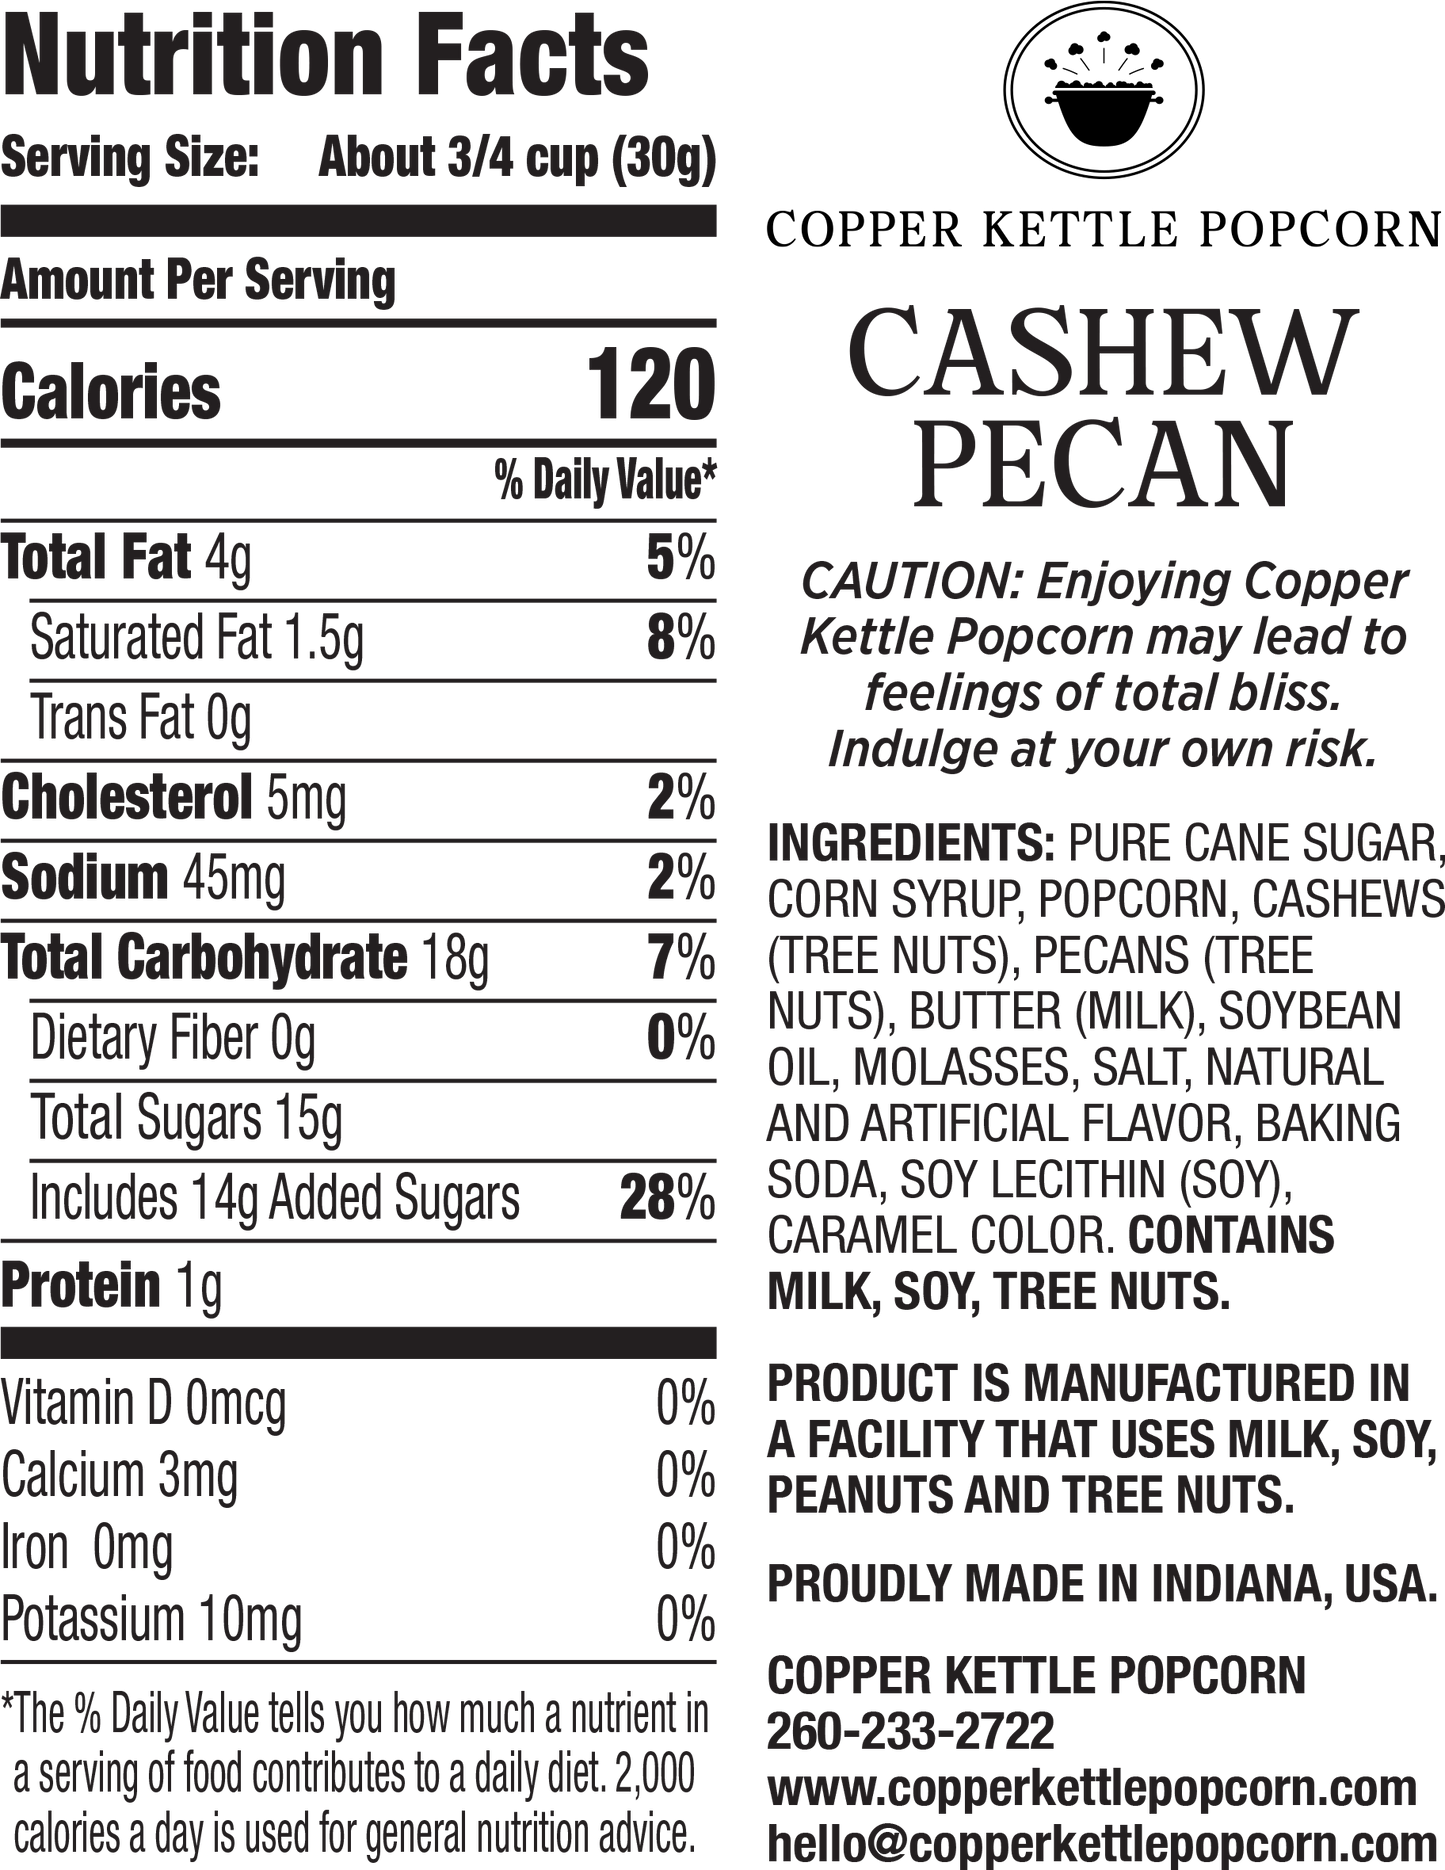 Cashew Pecan Tub 22 Servings Nutrition Label